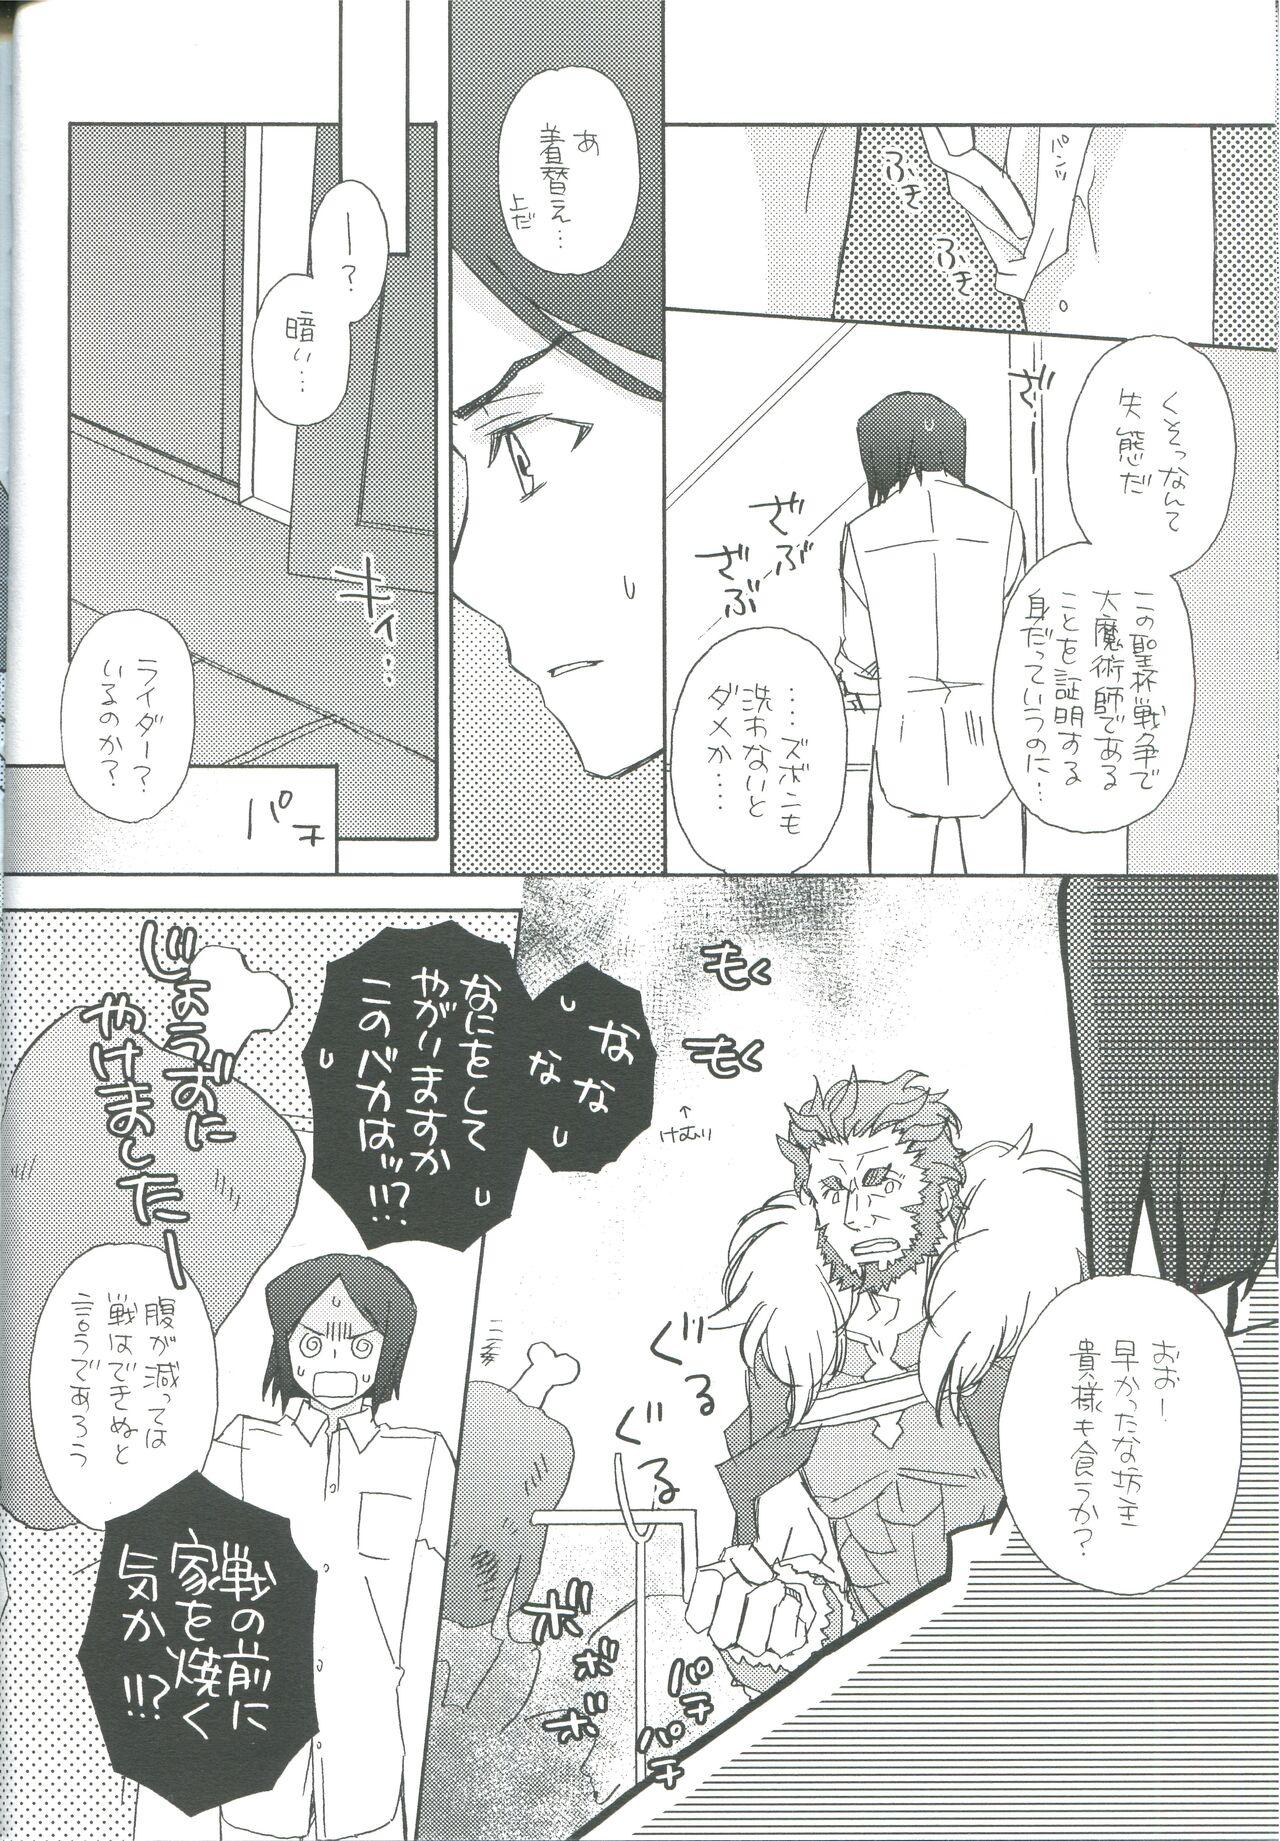 Club INTERMISSION - Fate zero Storyline - Page 6